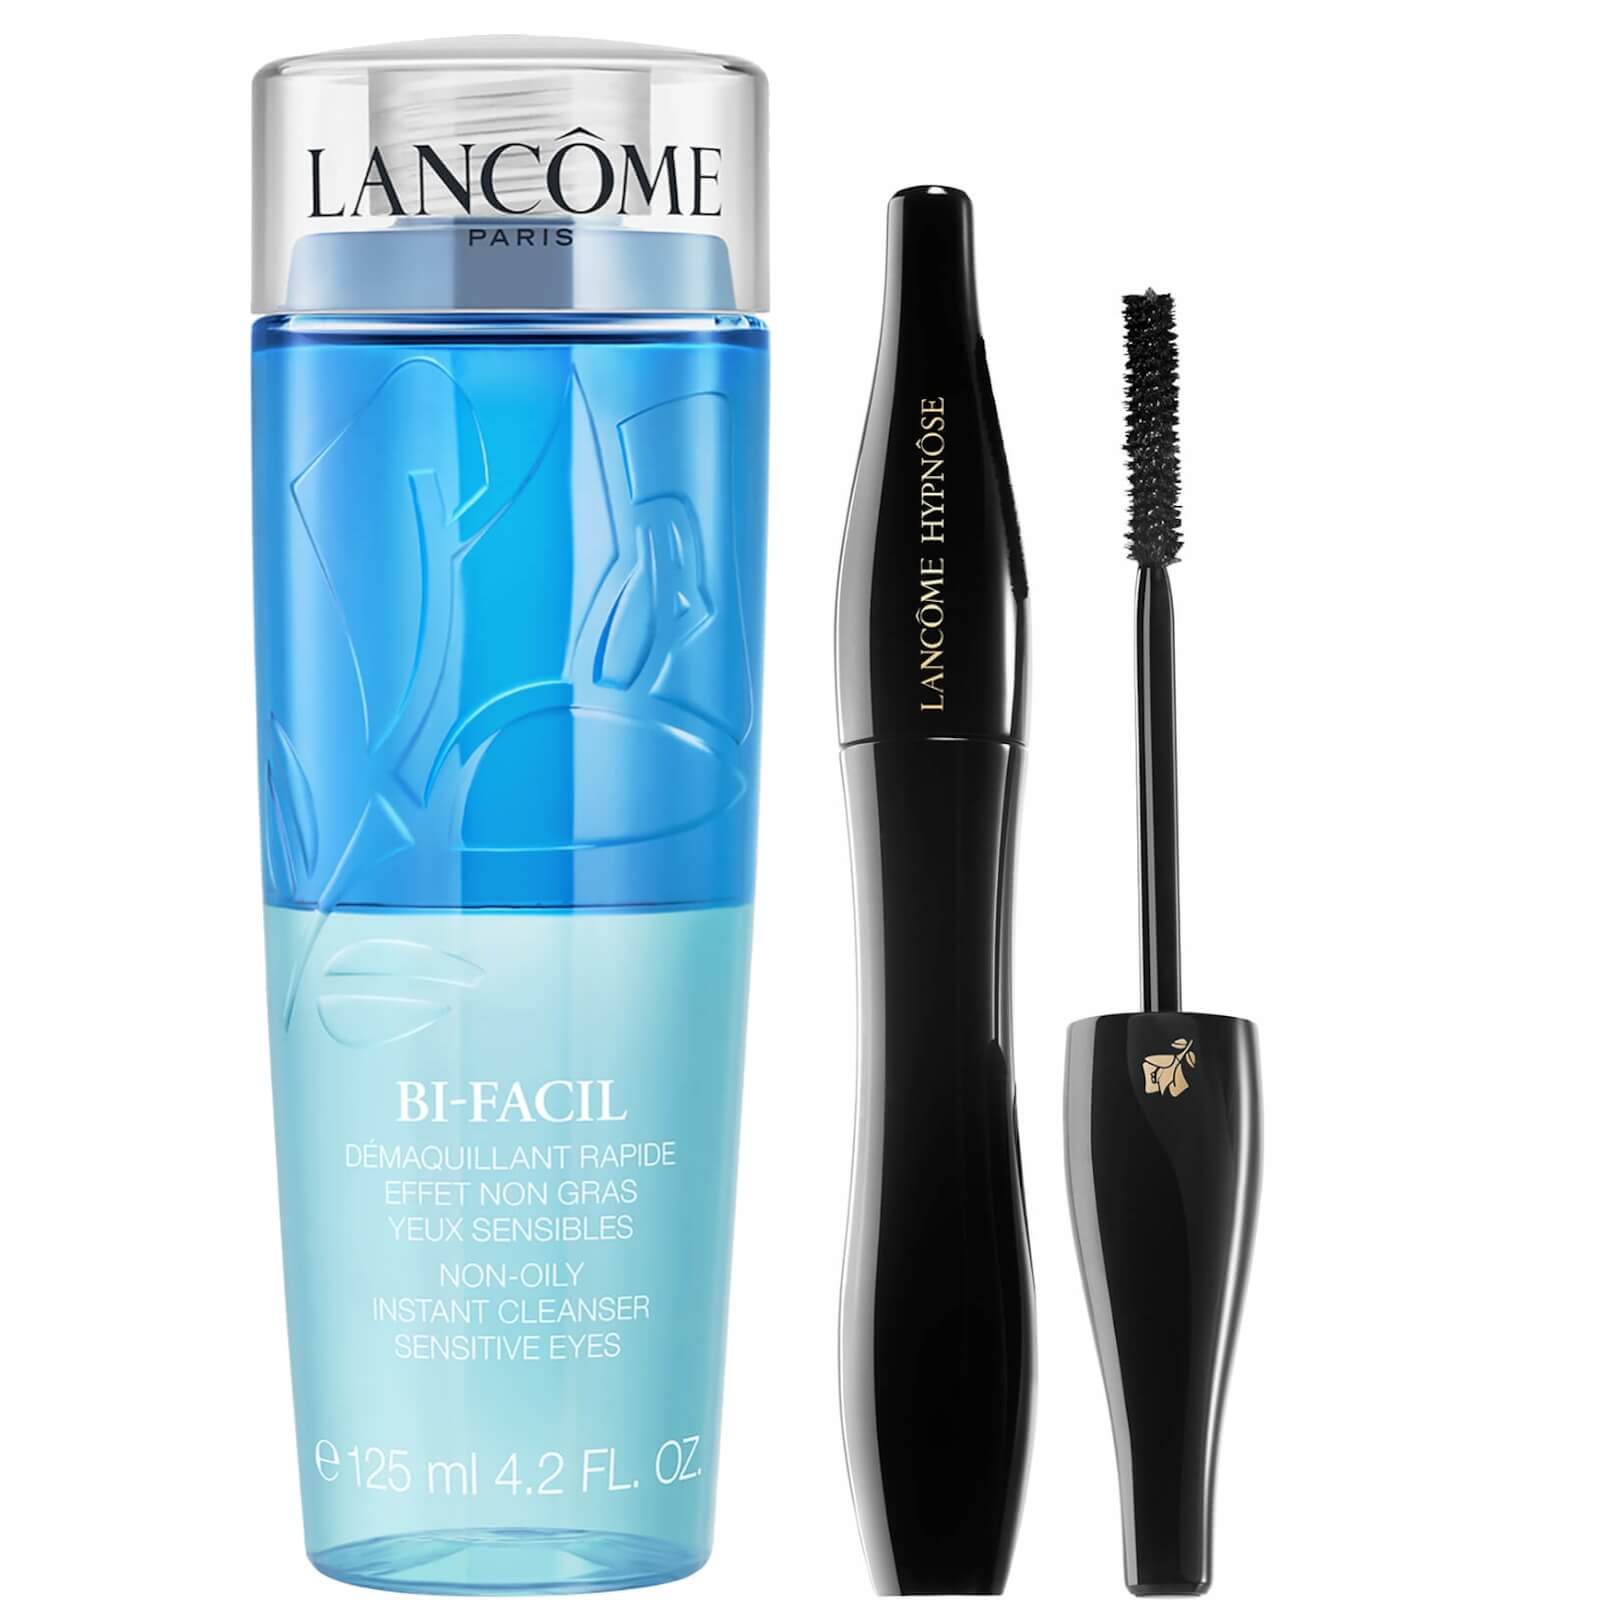 Image of Lancôme Hypnose Mascara and Bi-Facil Makeup Remover Routine